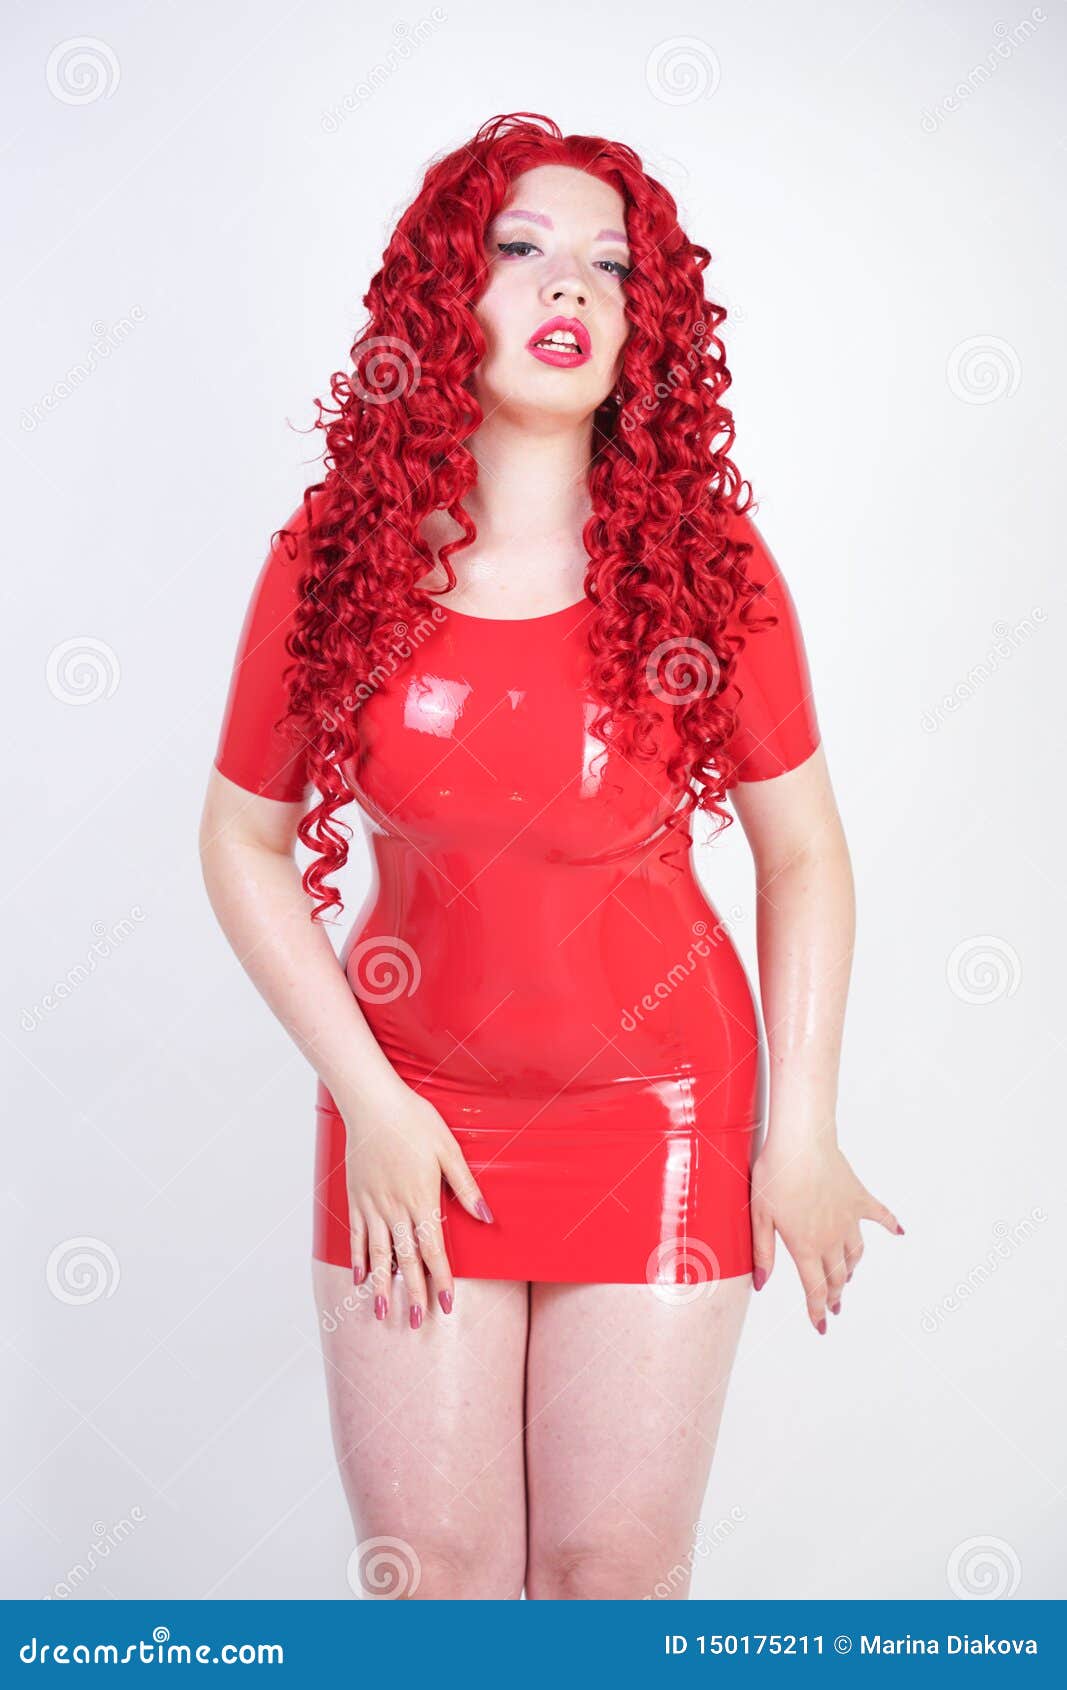 Hot Curvy Redheads